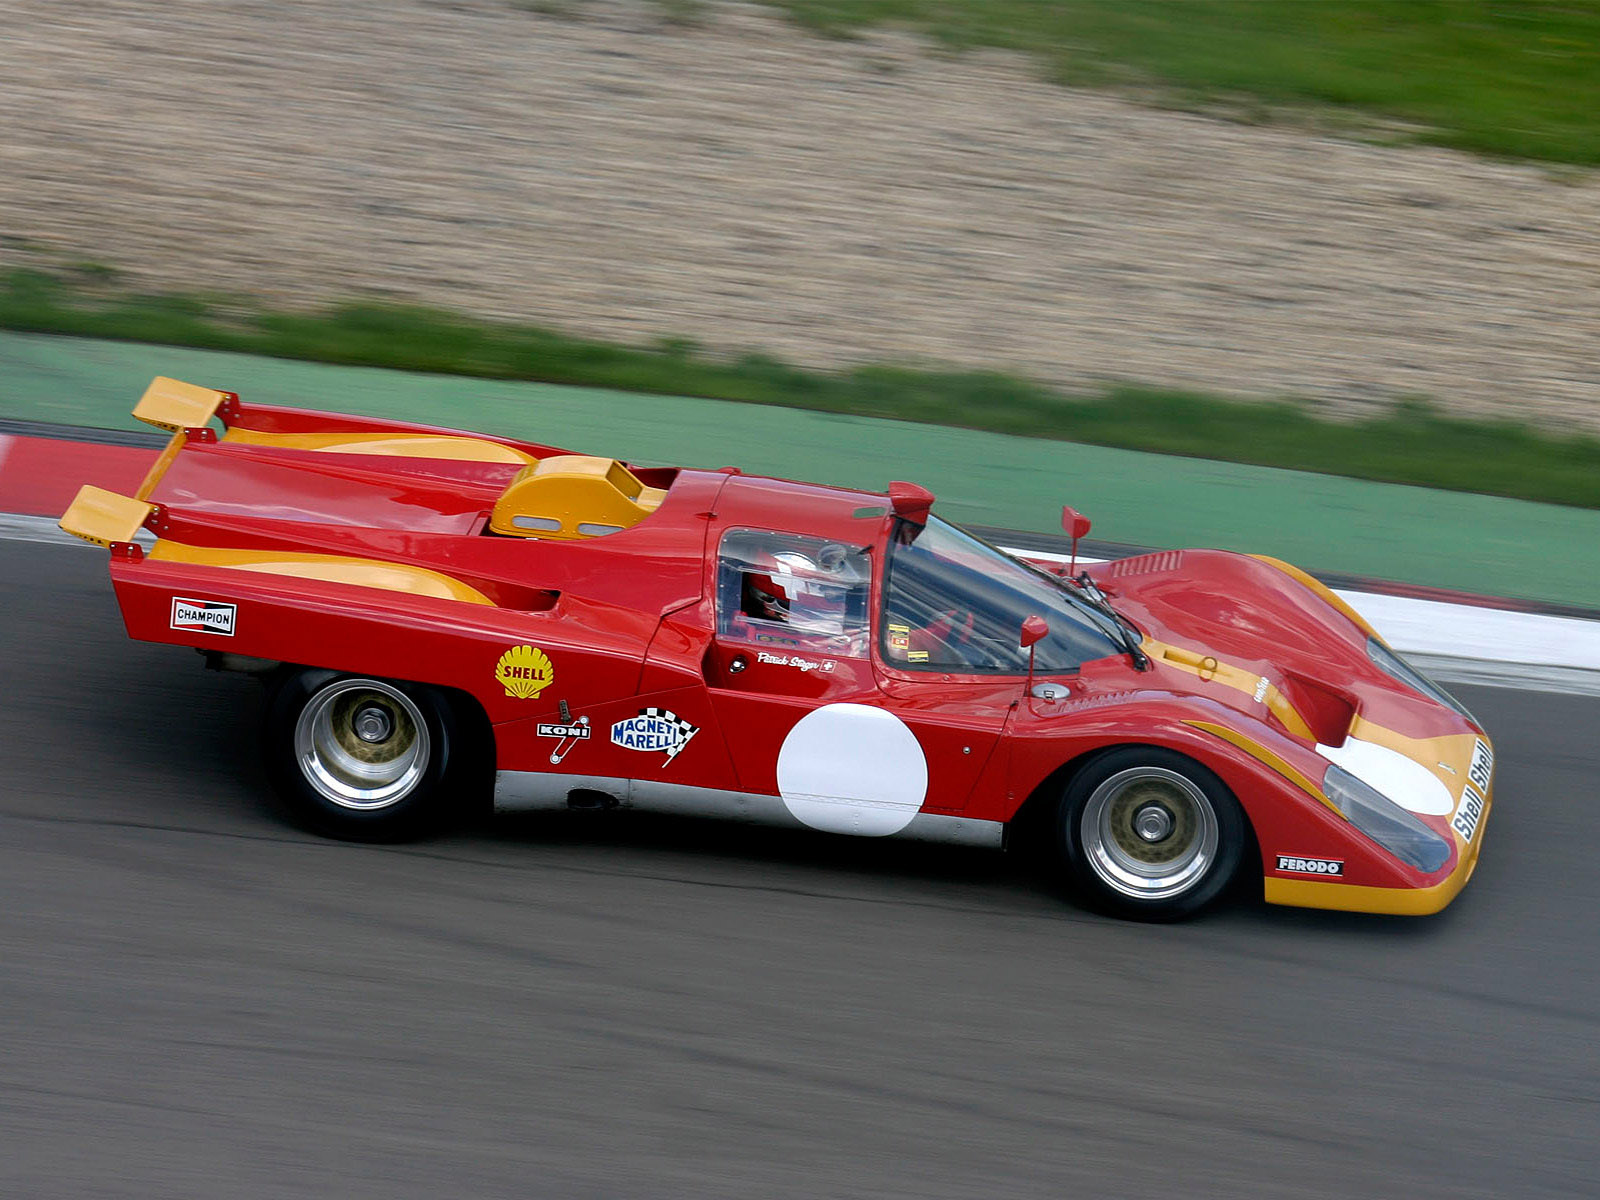 Car in pictures – car photo gallery » Ferrari 512 M 1970 Photo 02